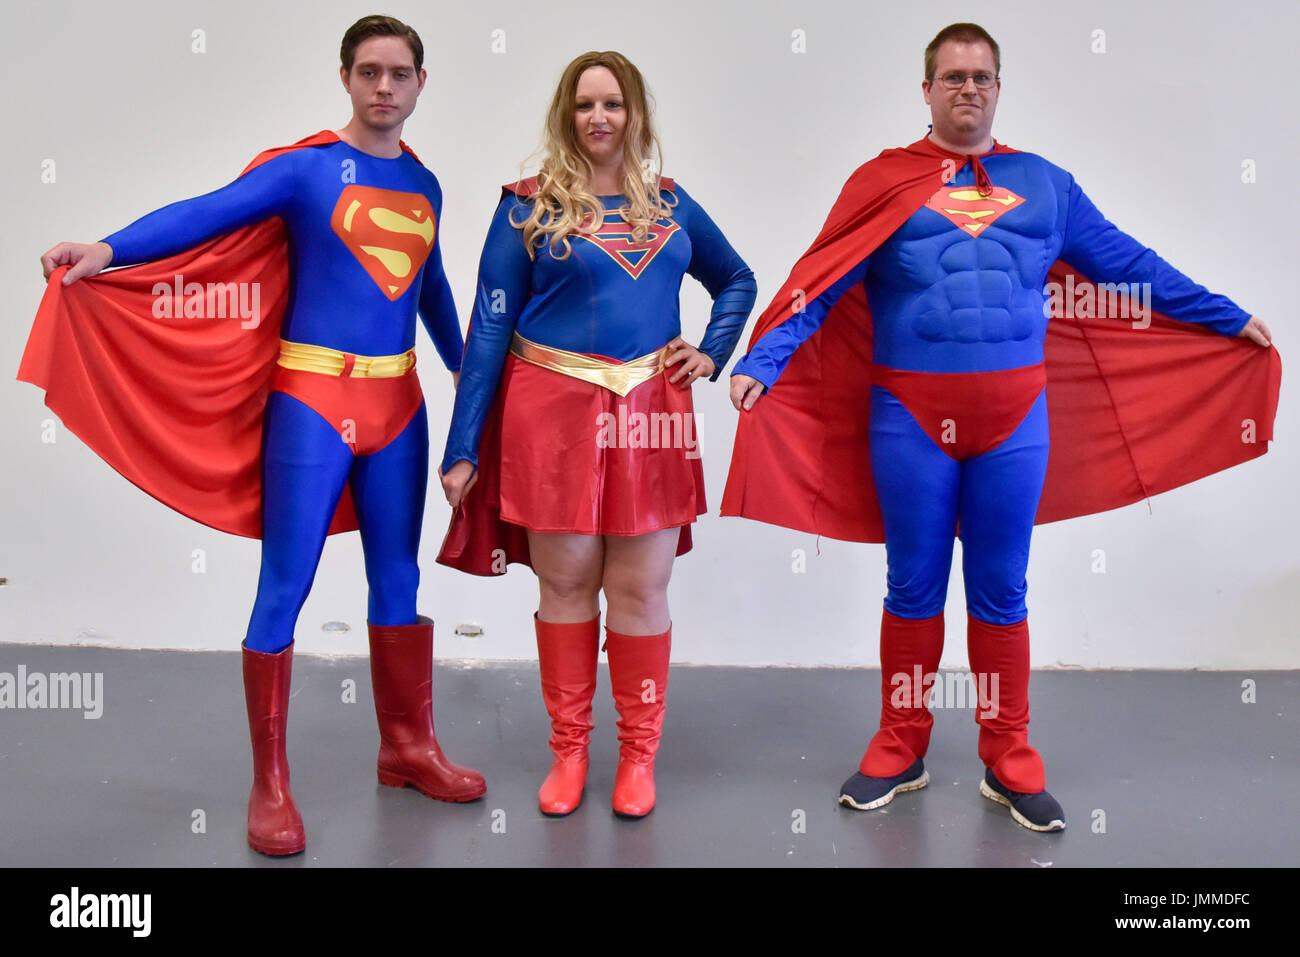 Supergirl costume Immagini Vettoriali Stock - Alamy